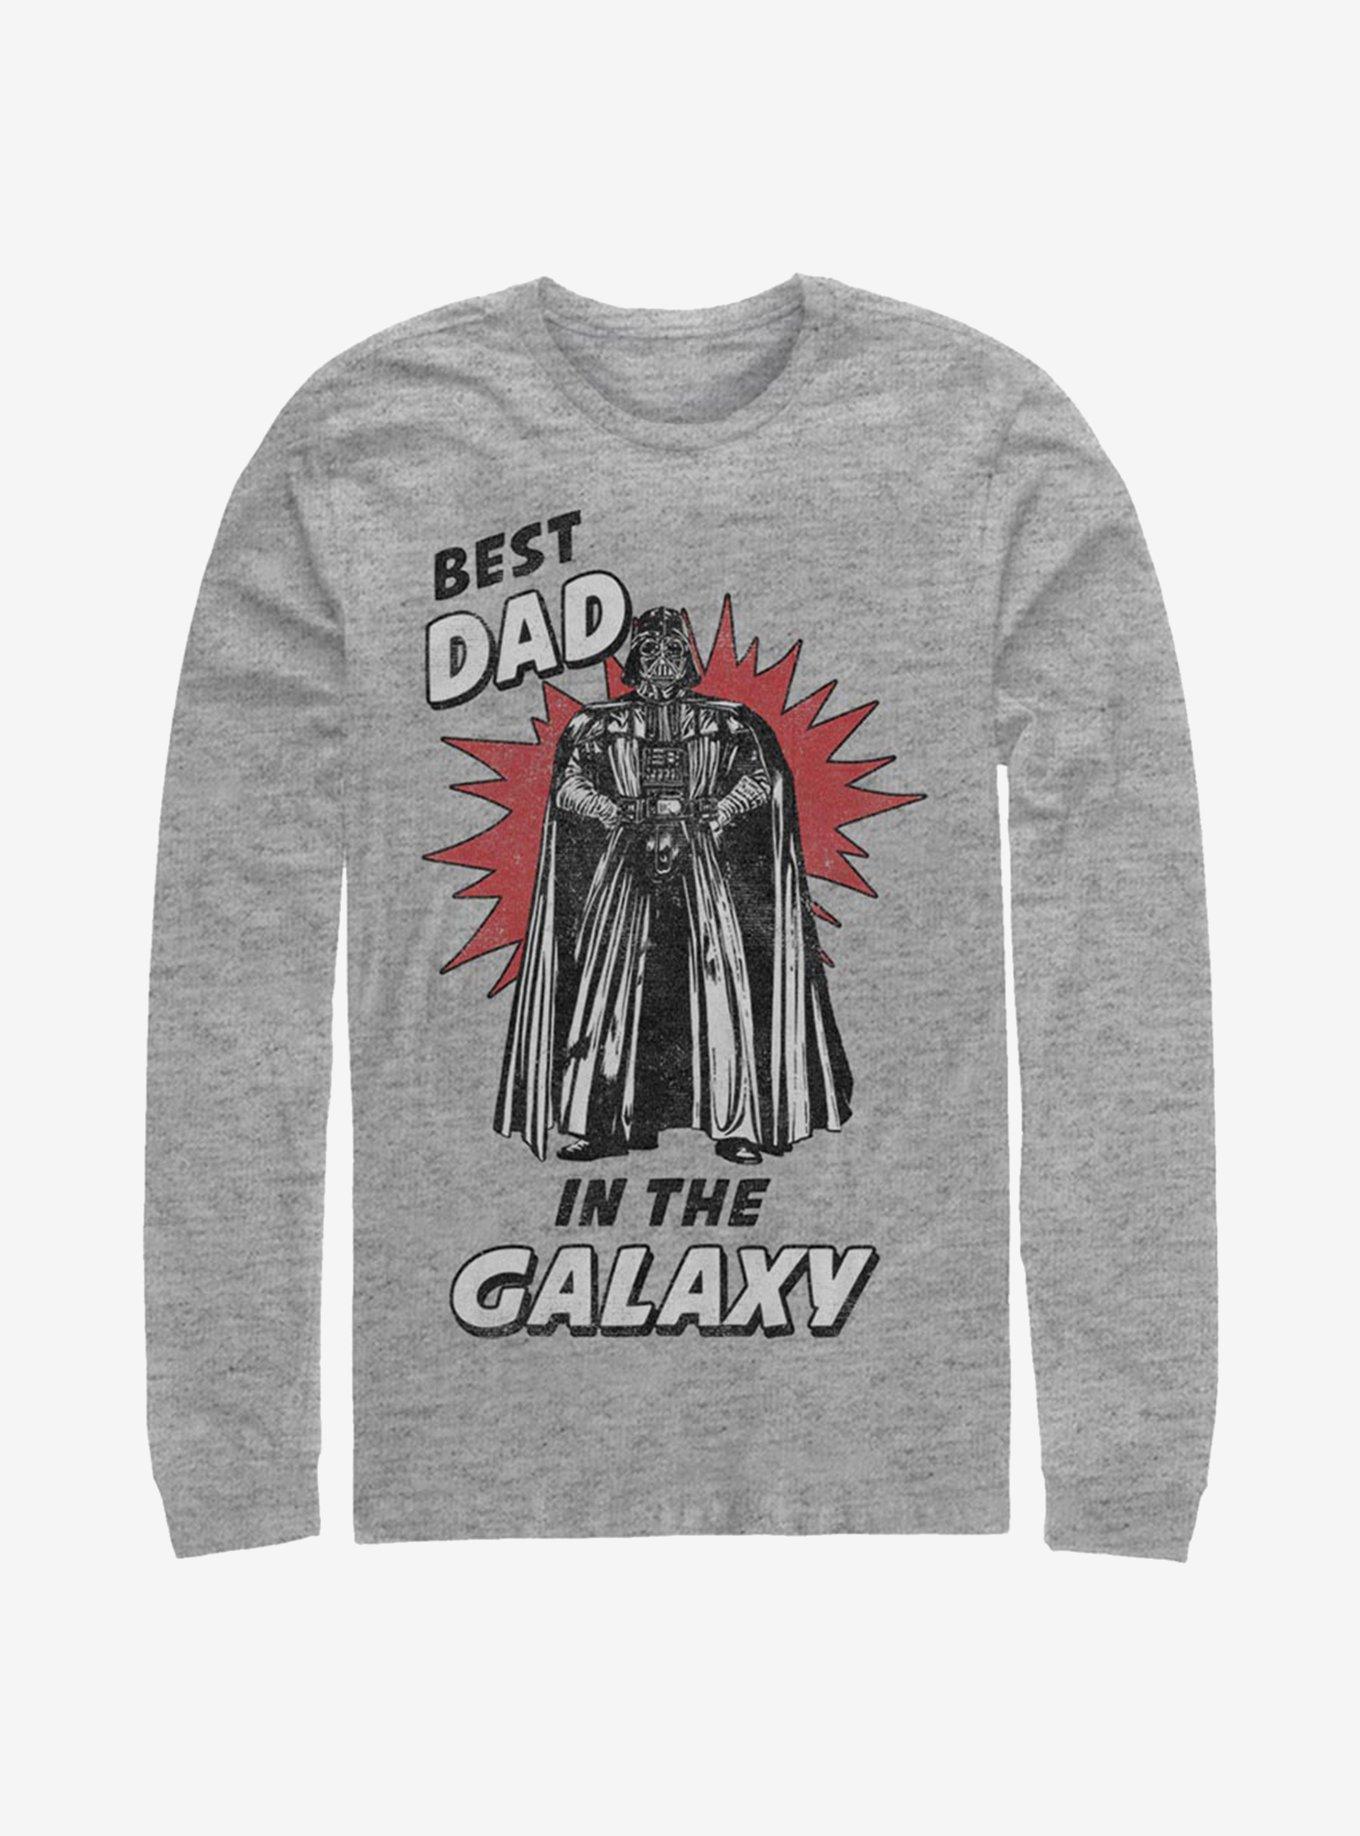 Star Wars Darth Vader Best Dad Long-Sleeve T-Shirt